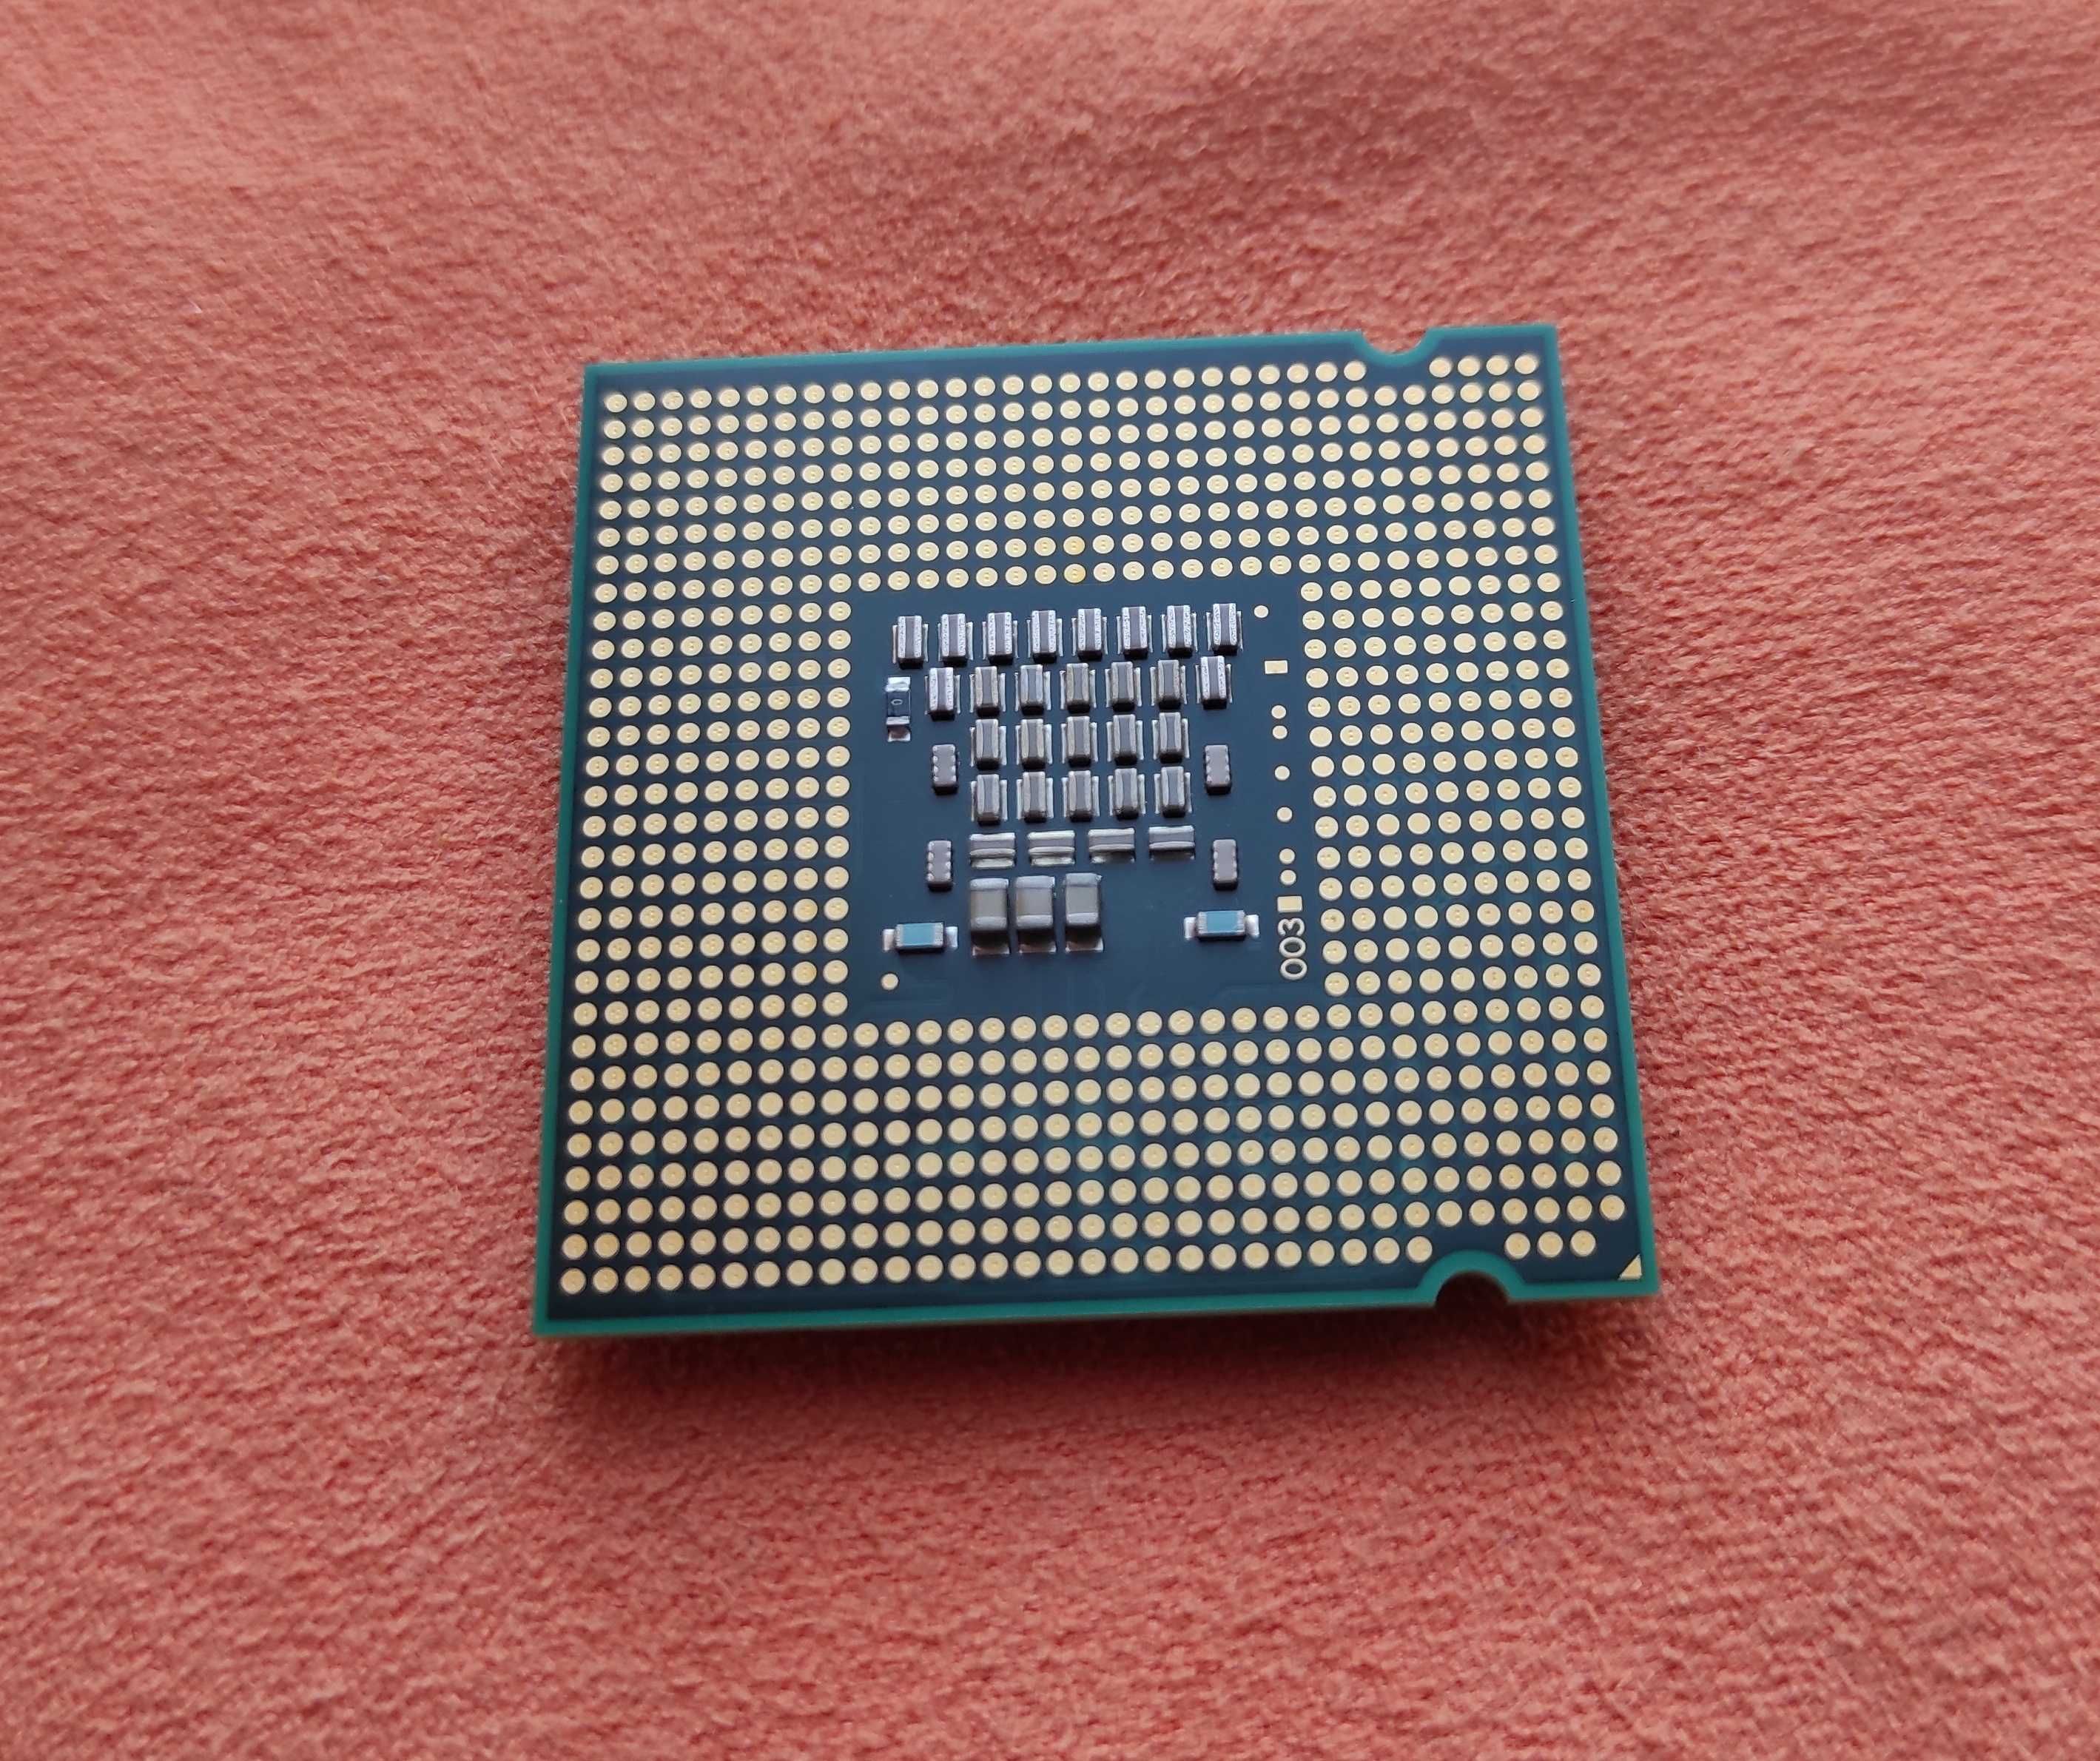 CPU Intel s775 Pentium Dual Core E2220 (2.4GHz) tray